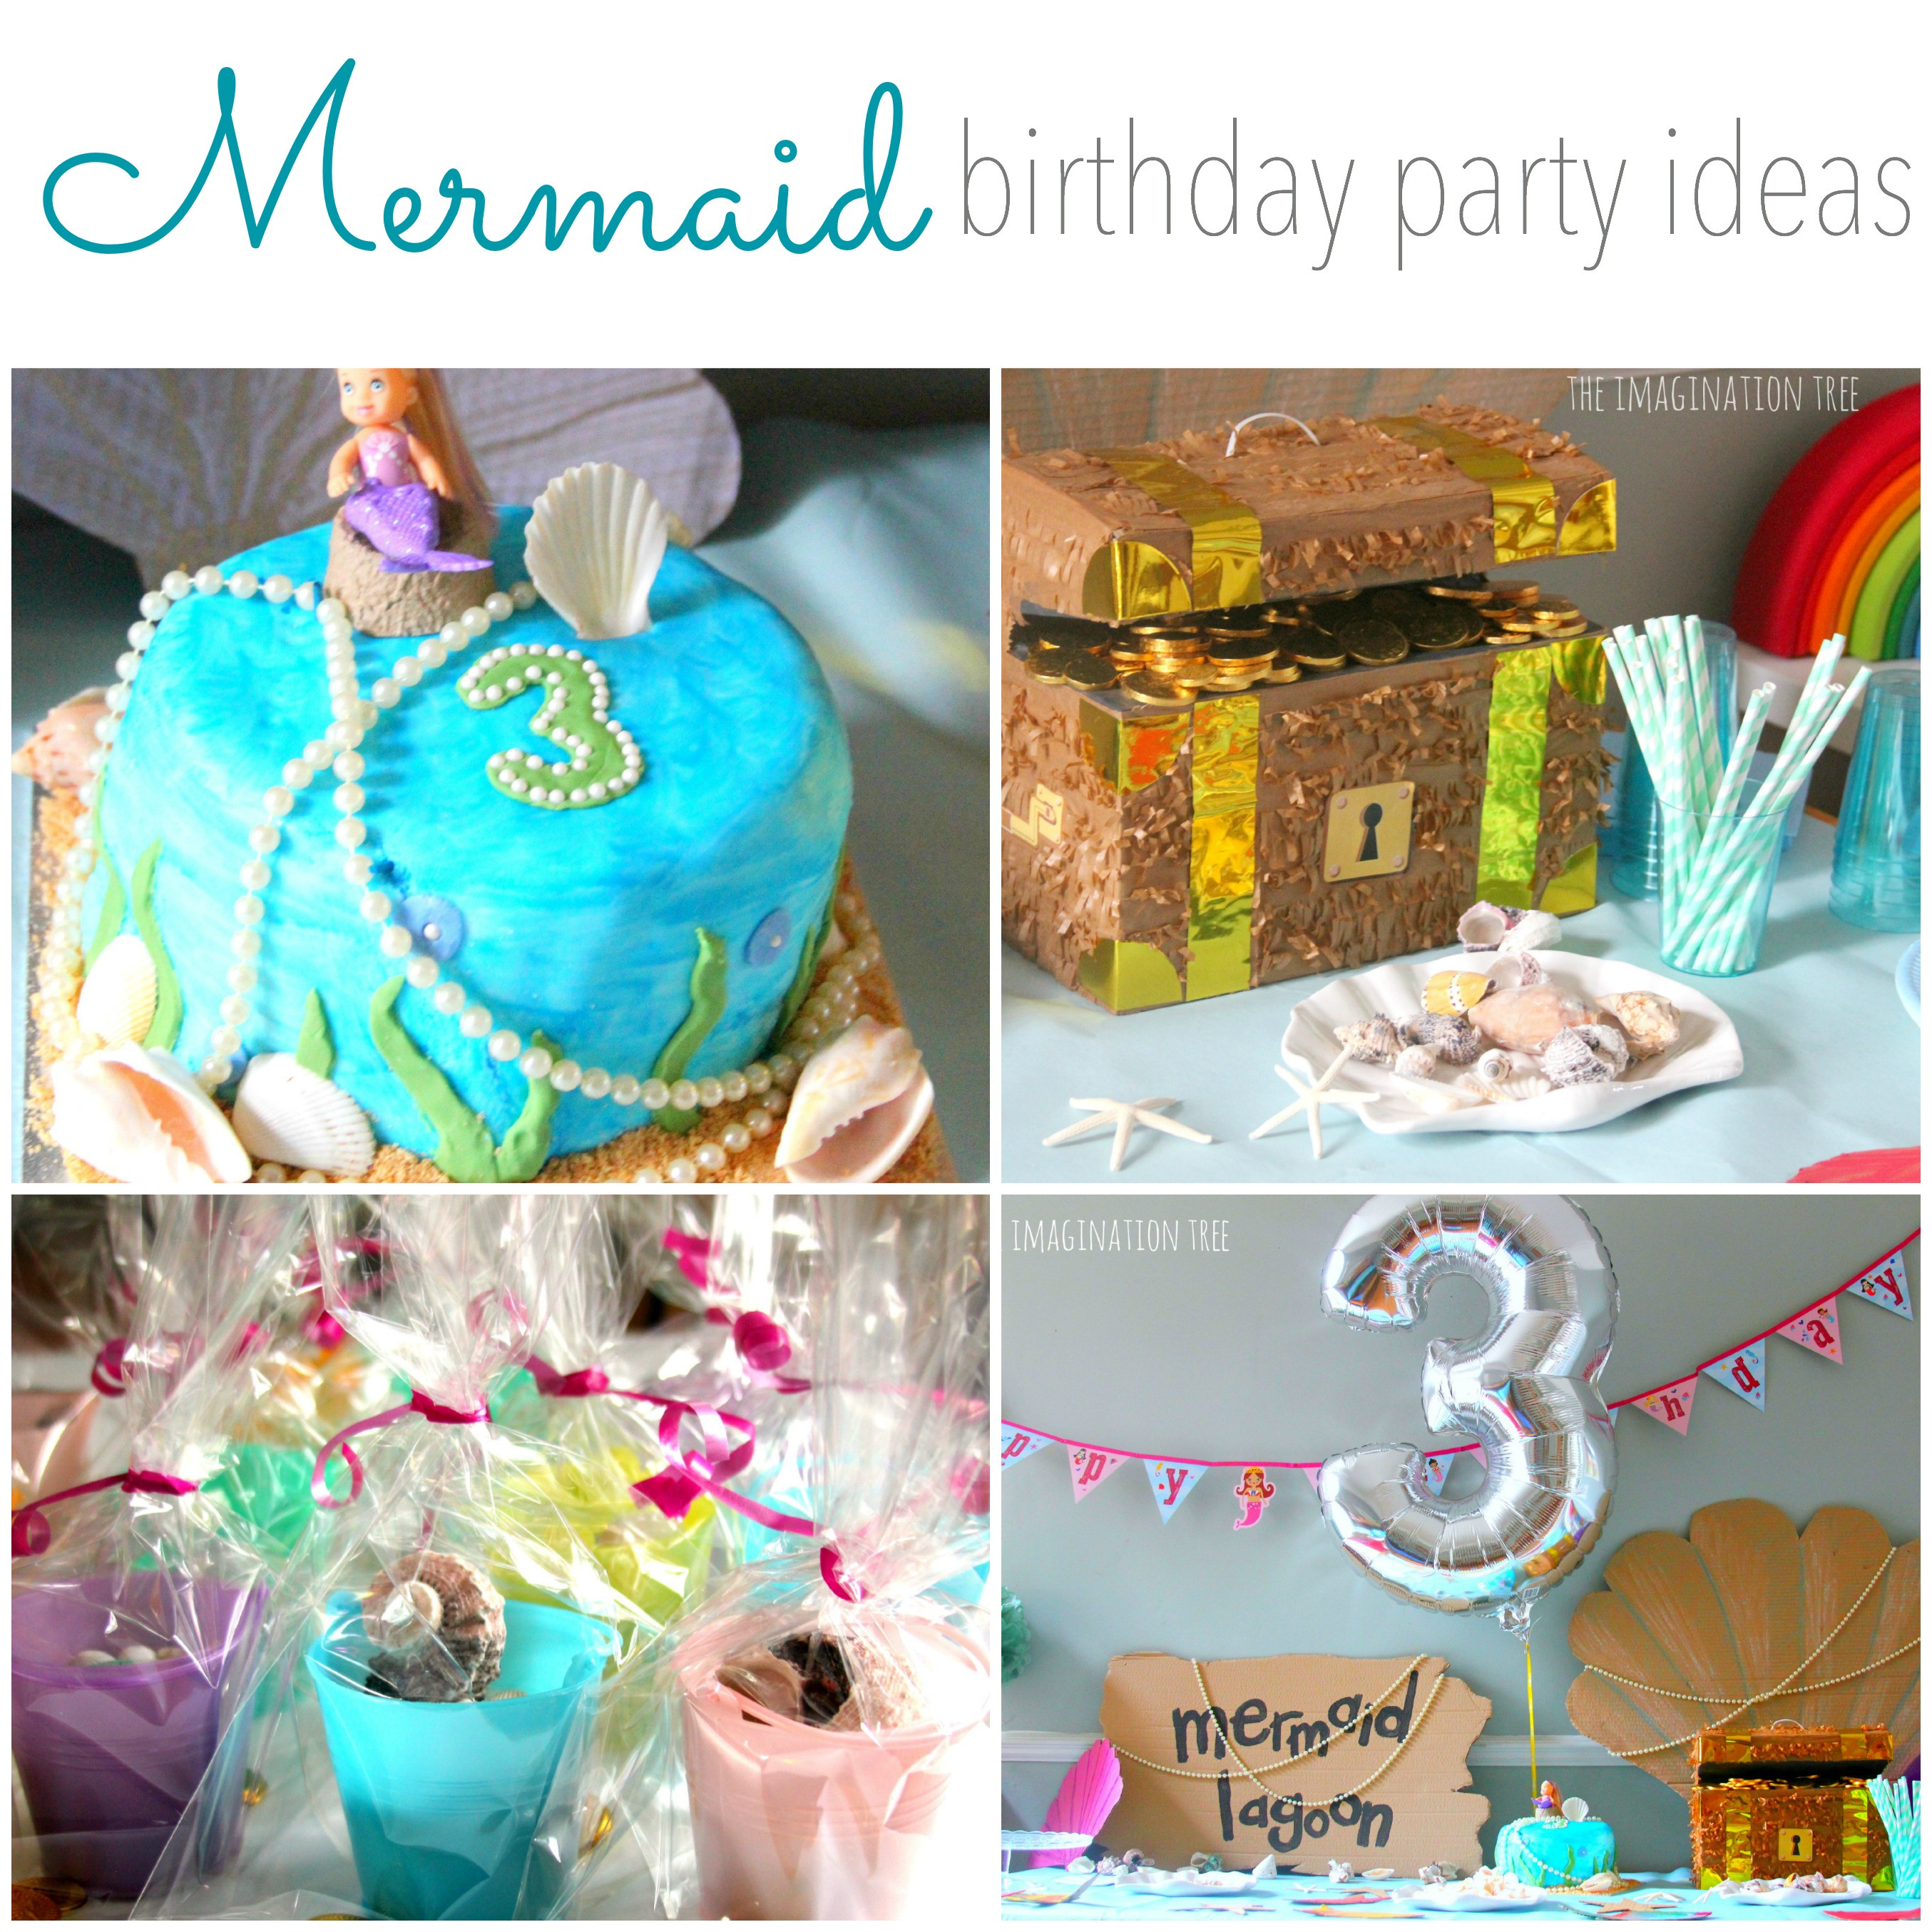 Mermaid Party Ideas 4 Year Old
 Mermaid Birthday Party Ideas The Imagination Tree